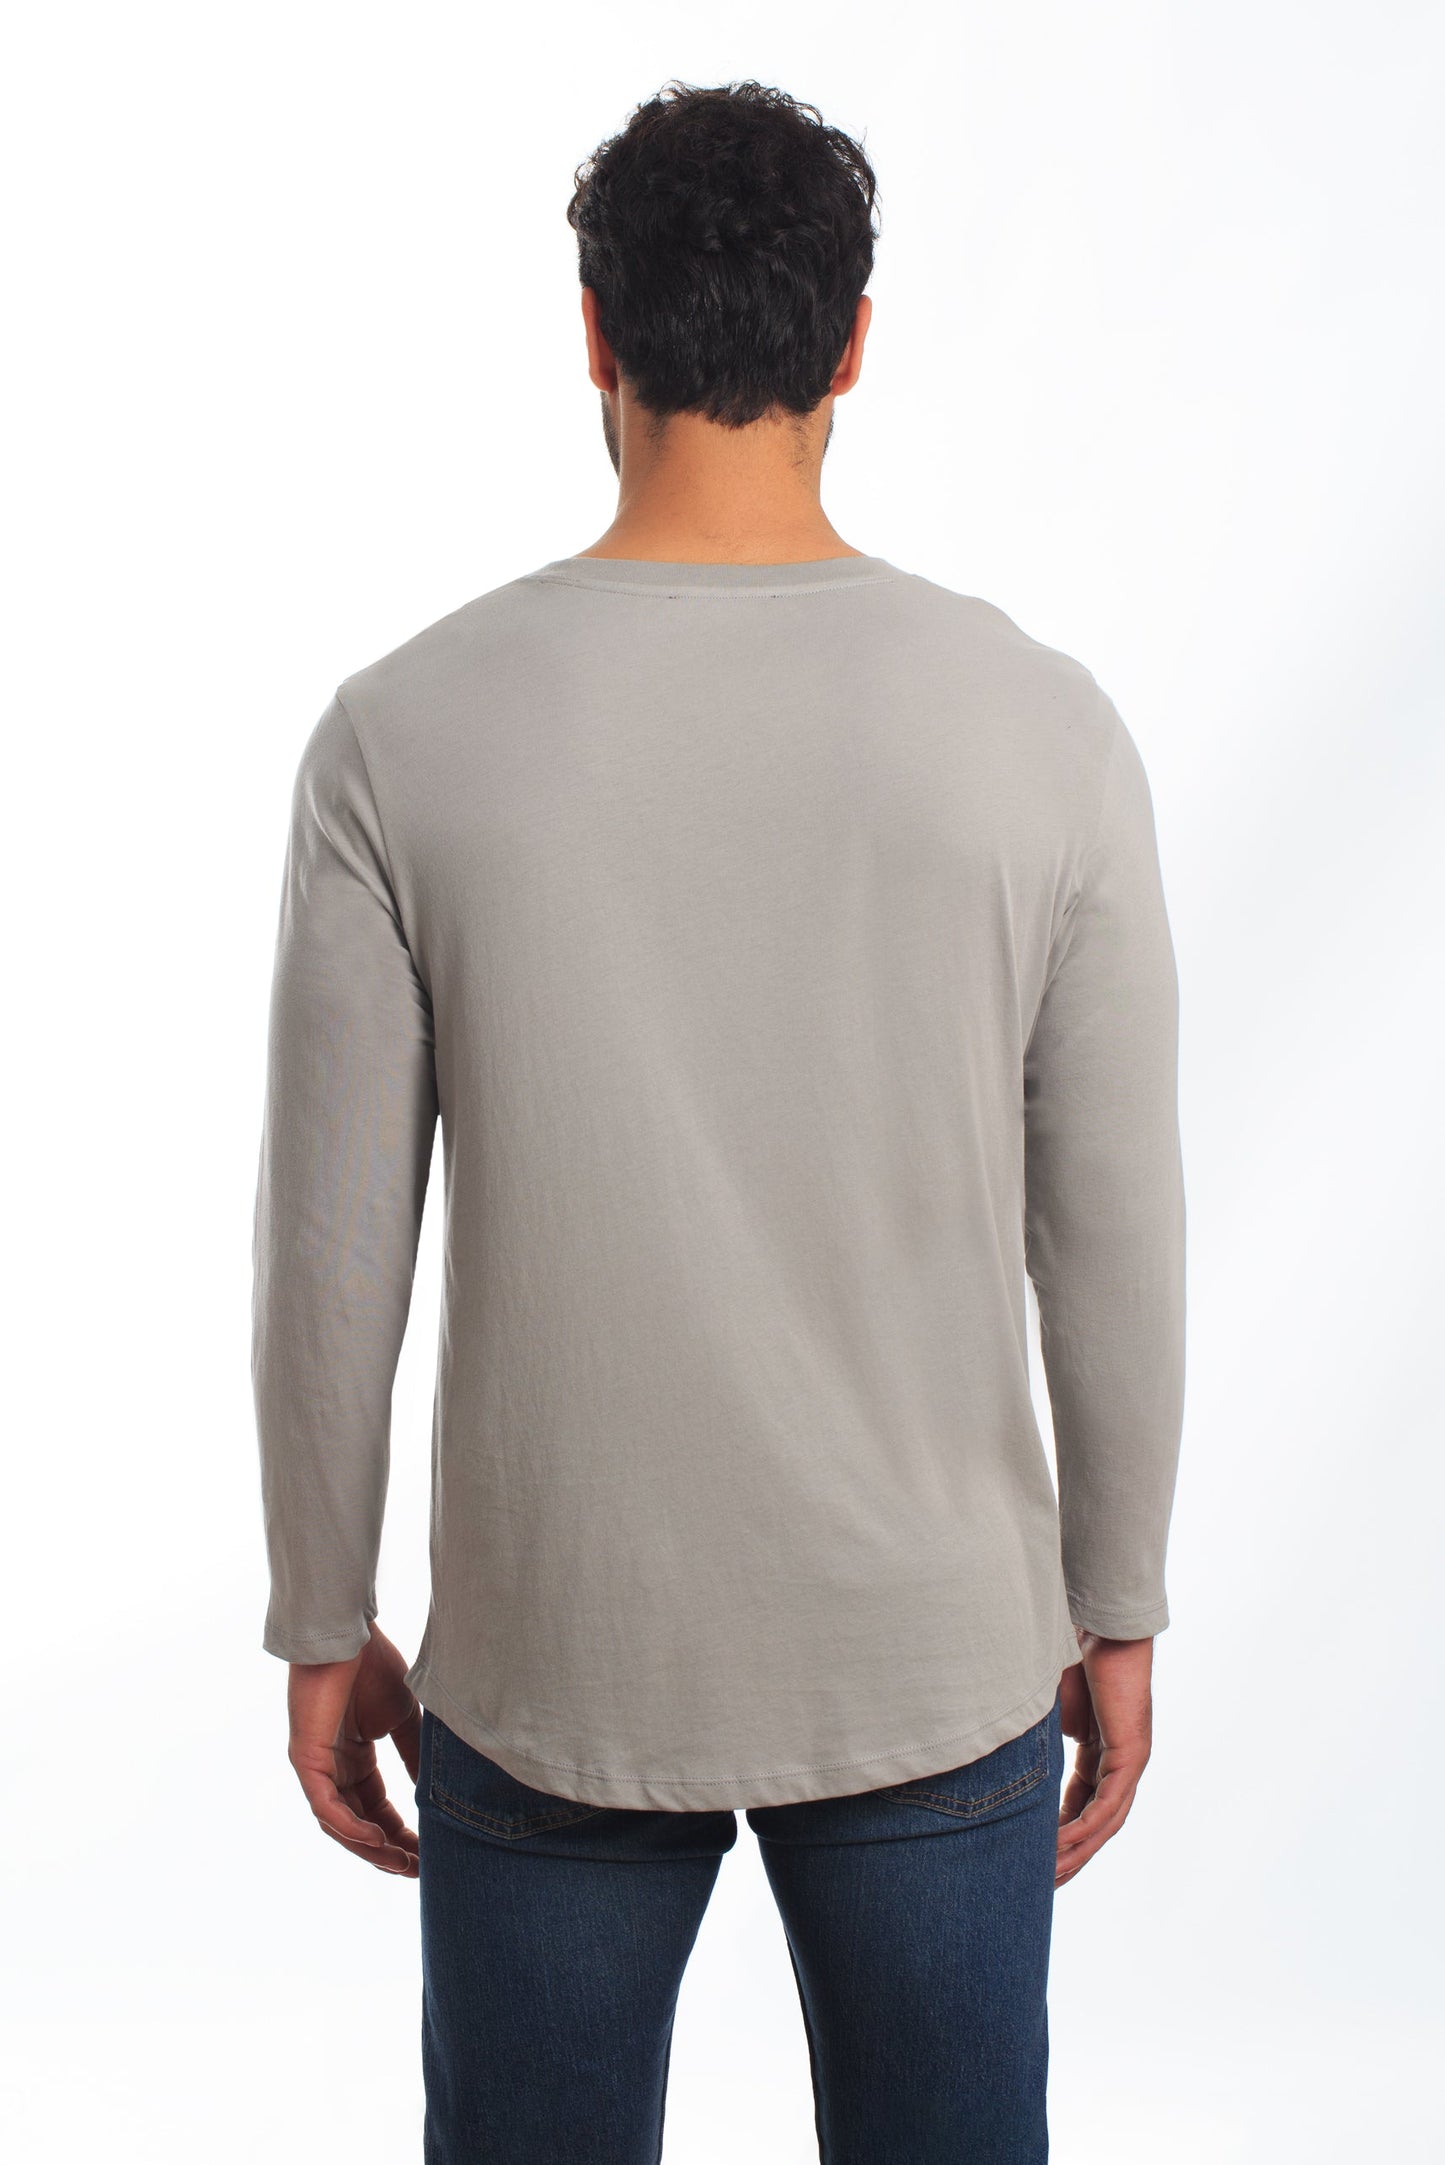 Grey Long Sleeve T-Shirt TEL-114 Back